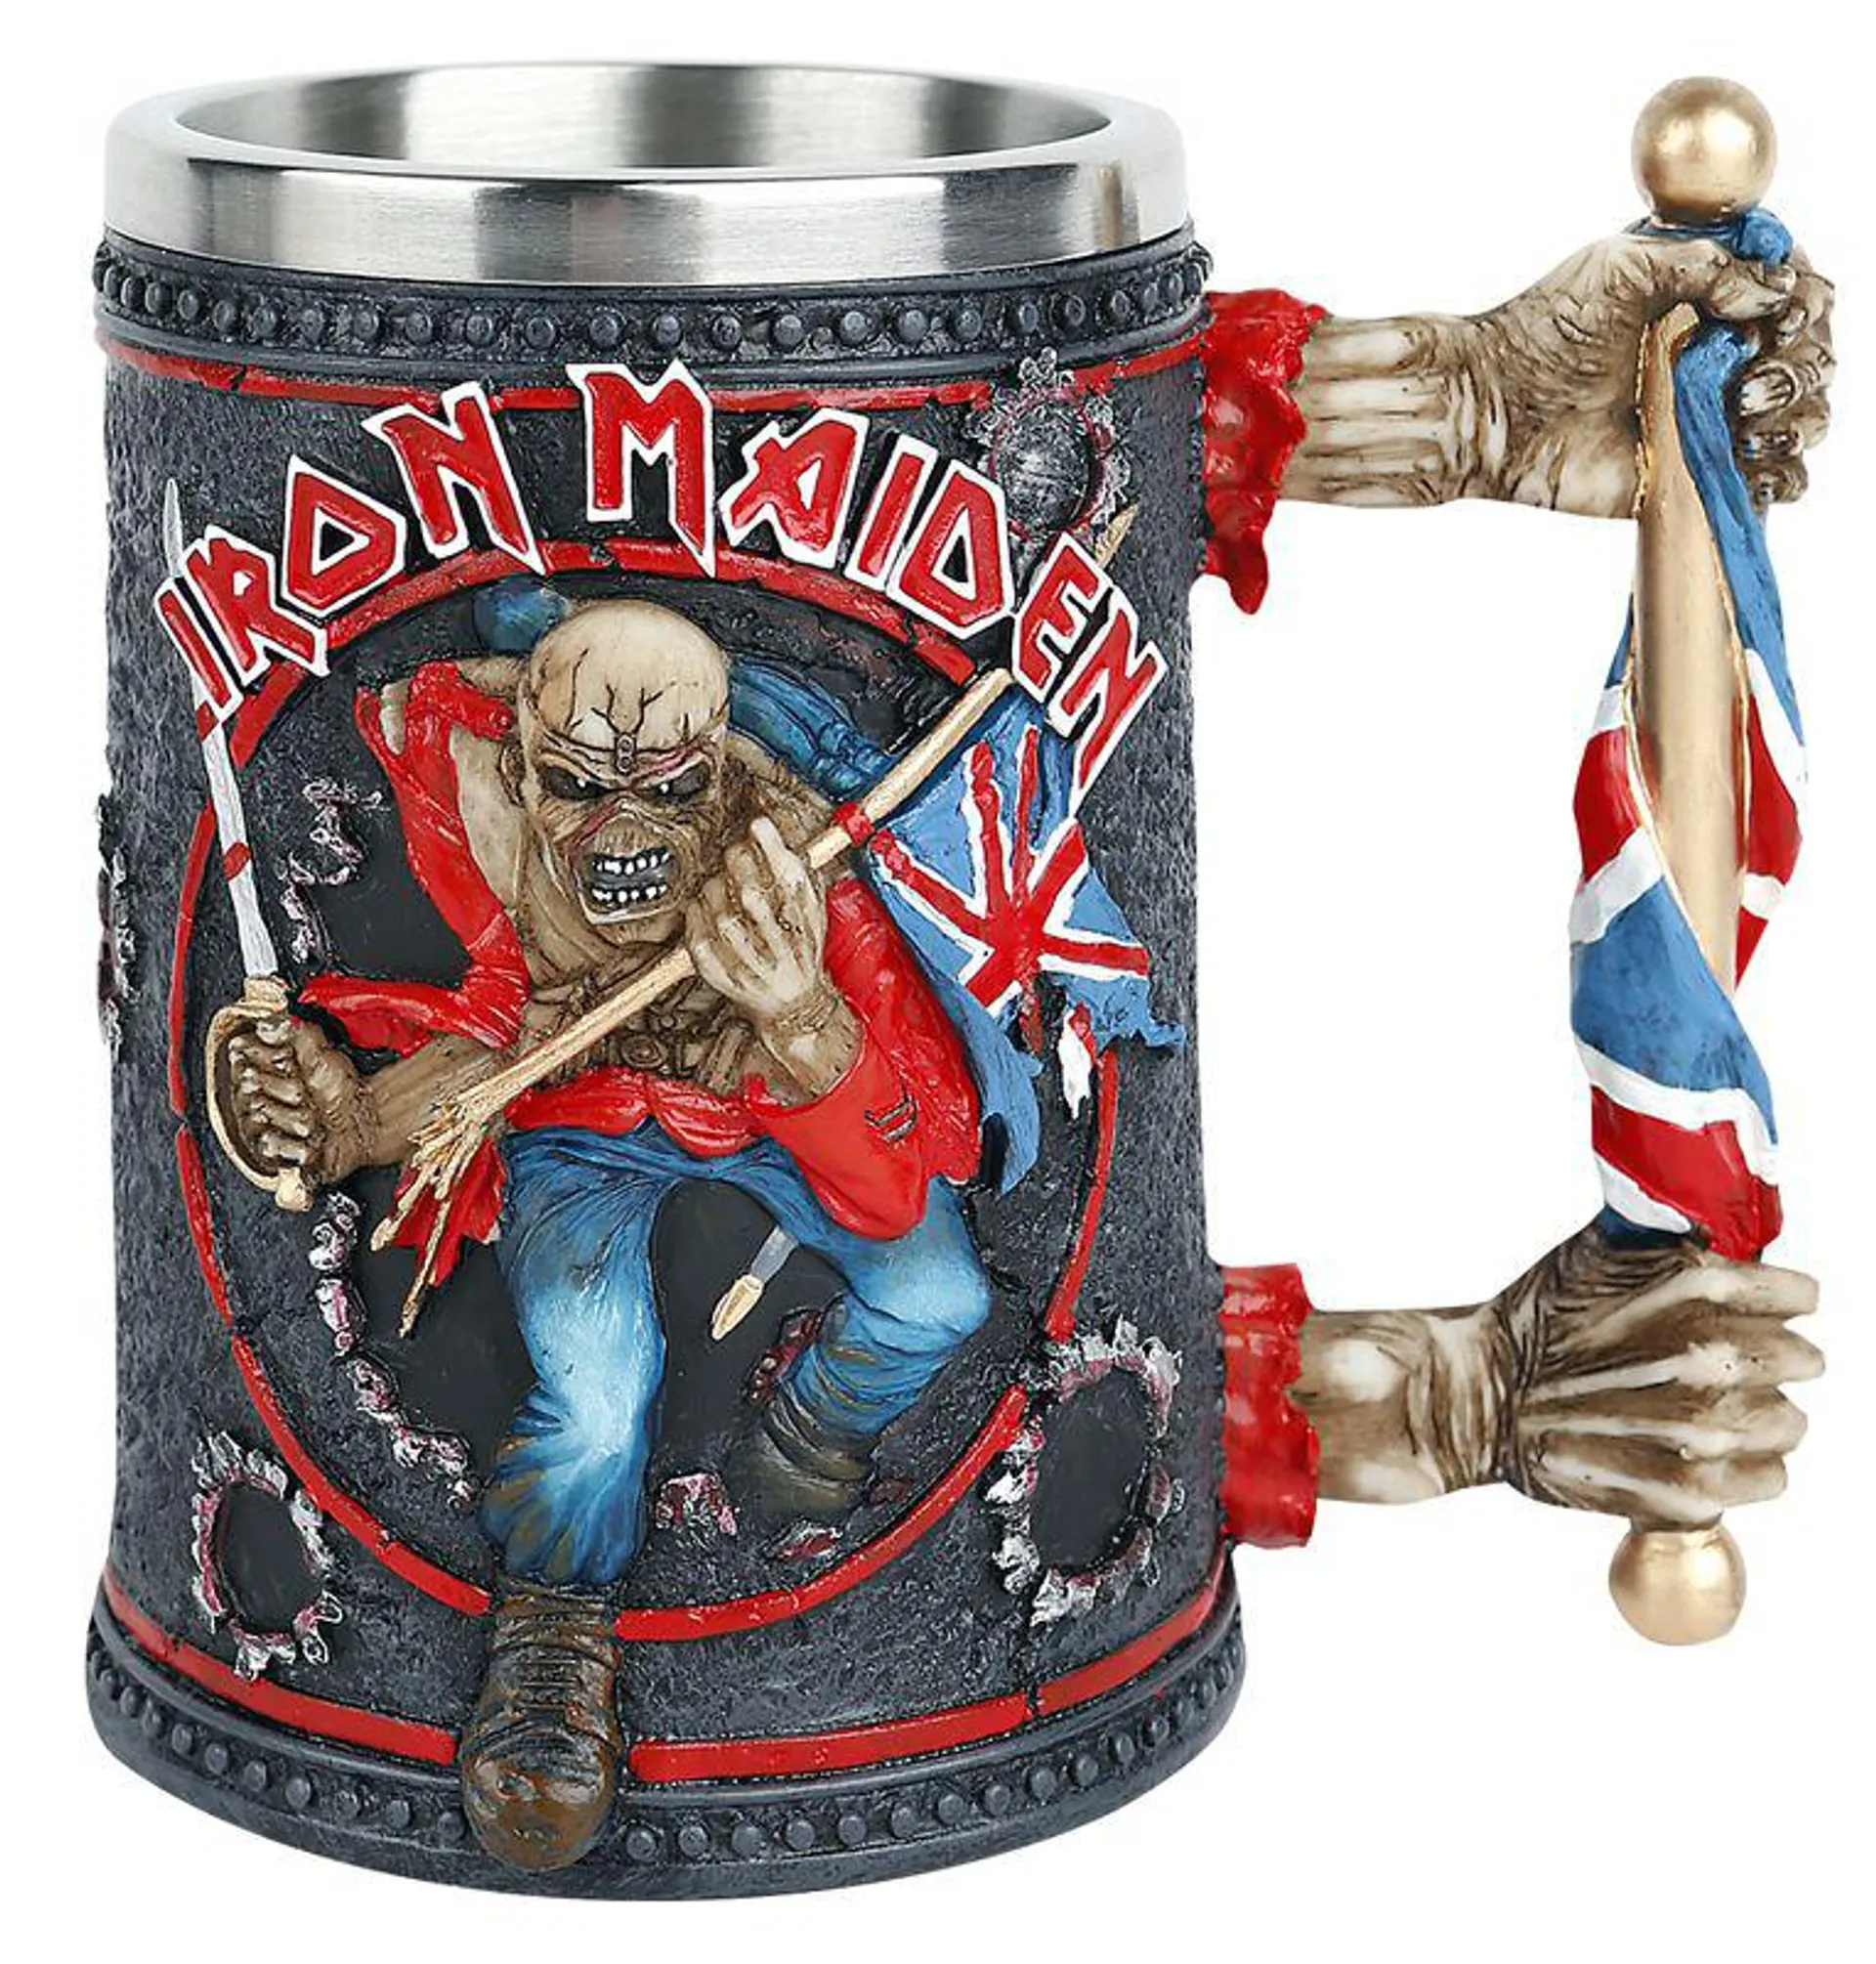 "Trooper Tankard" Jarra de Cerveza multicolor de Iron Maiden